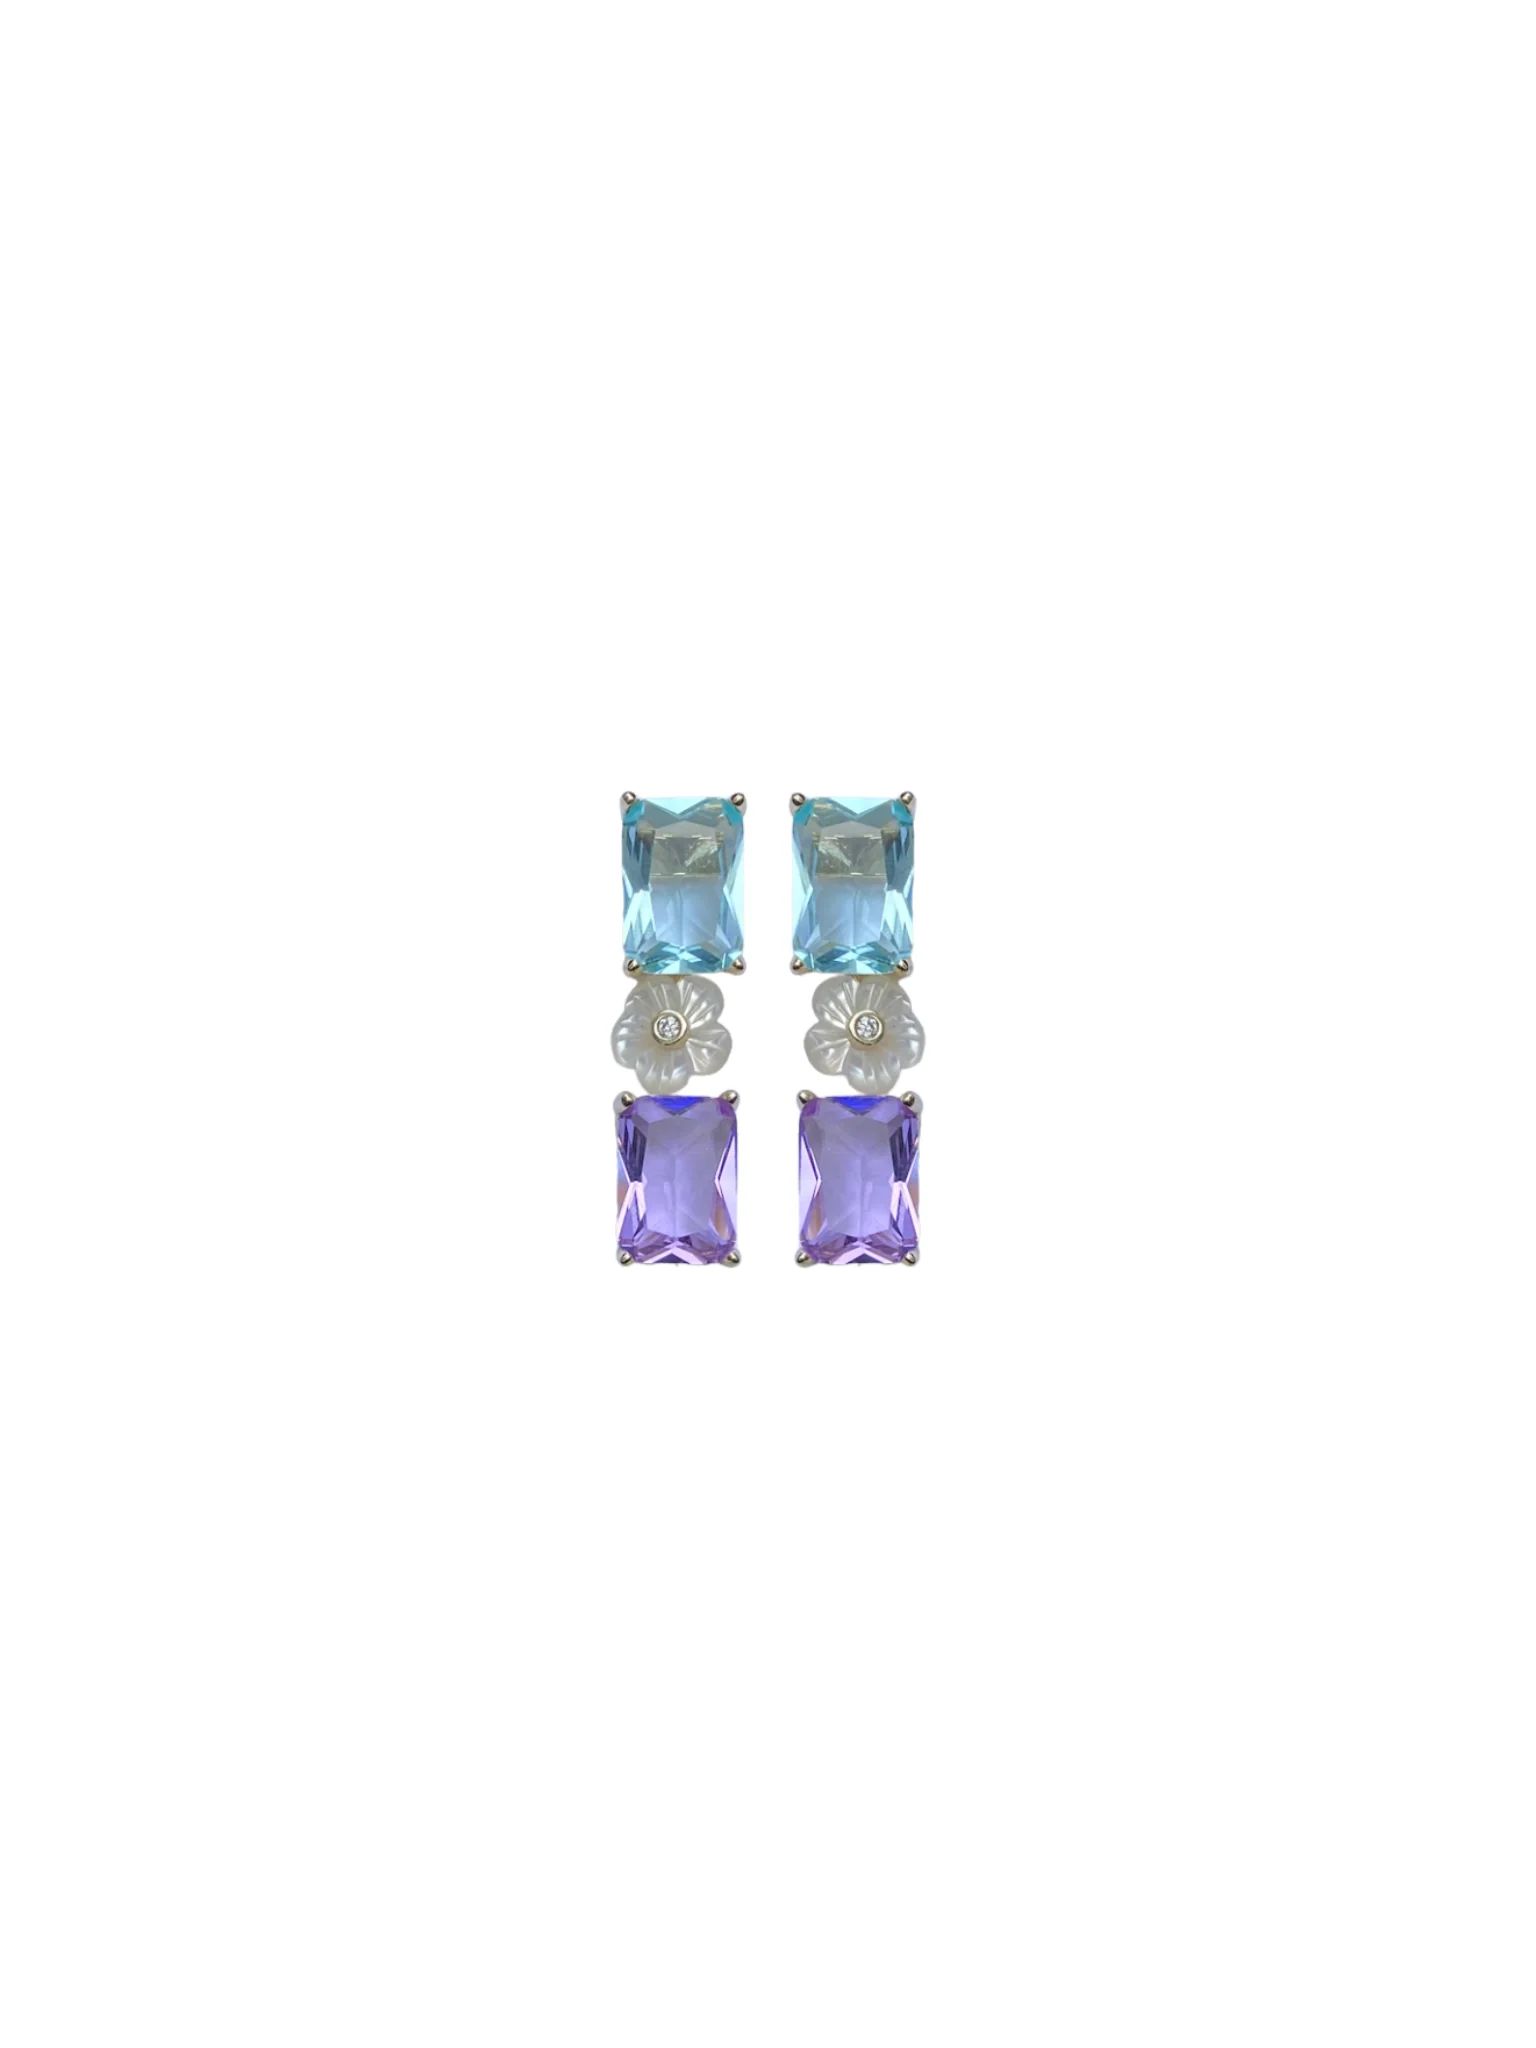 Mini Paris Blue & Lilac Mother of Pearl Flower Linear Earring | Nicola Bathie Jewelry